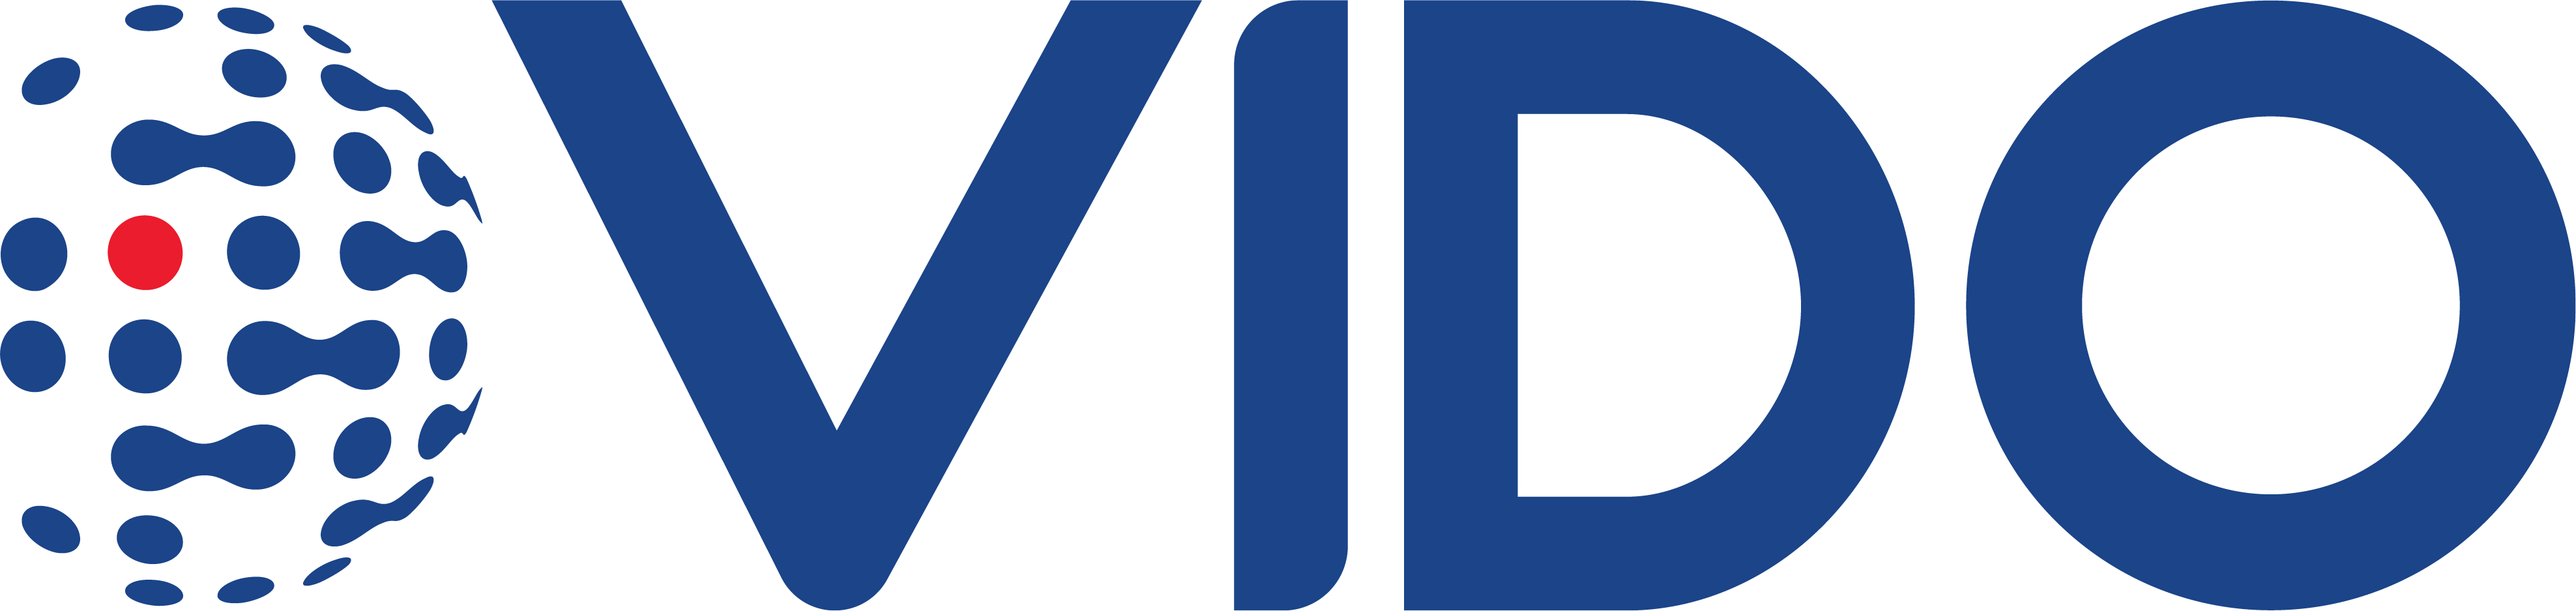 vido_logo-full-color.png